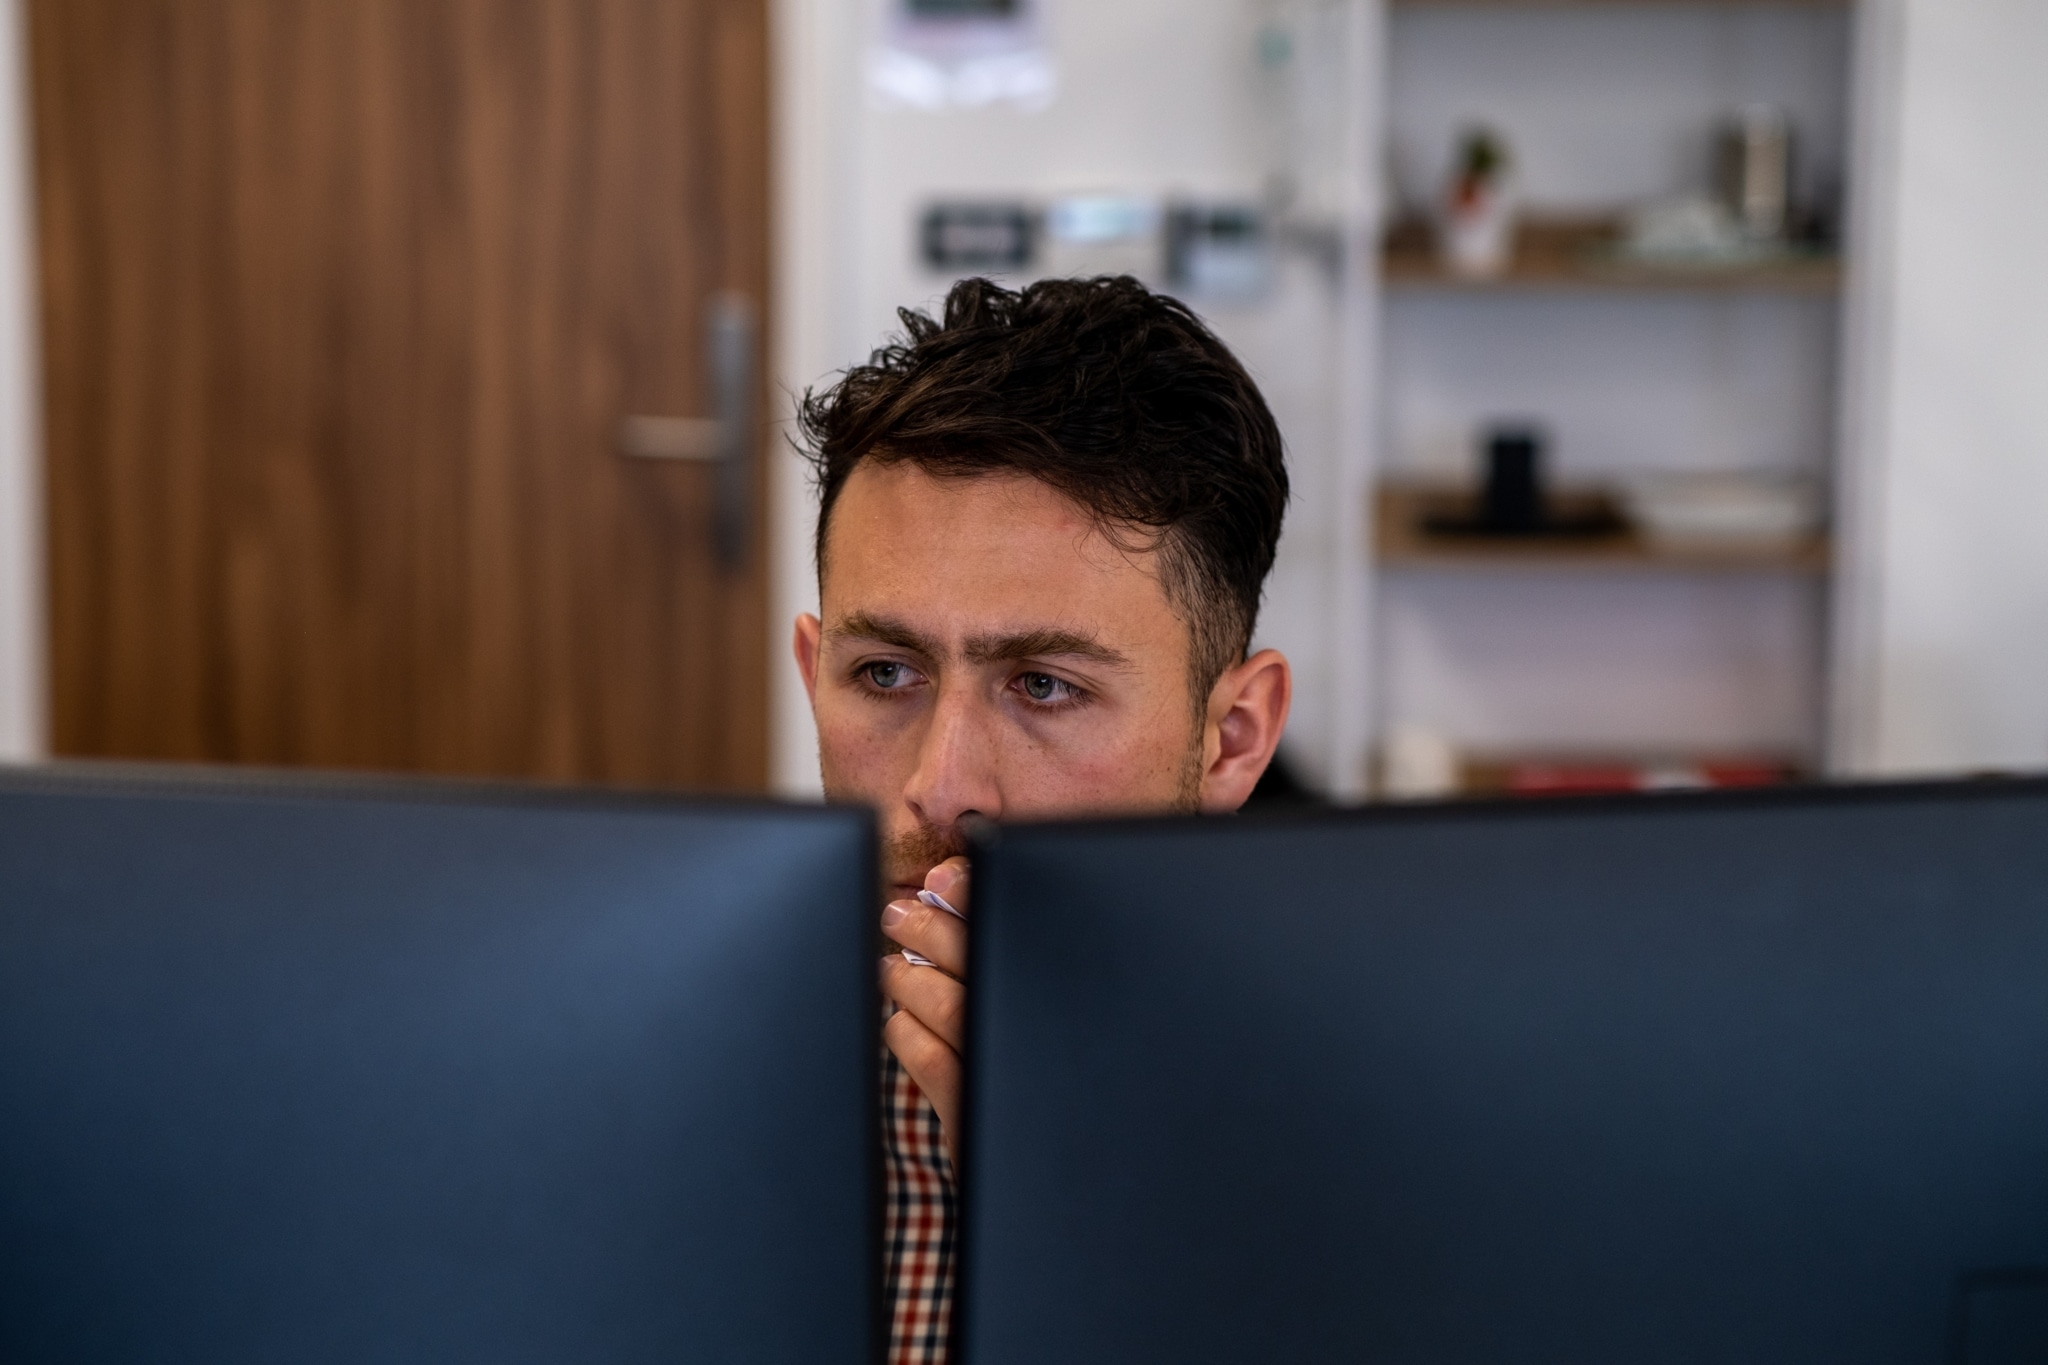 Working Man Staring at Computer Screens